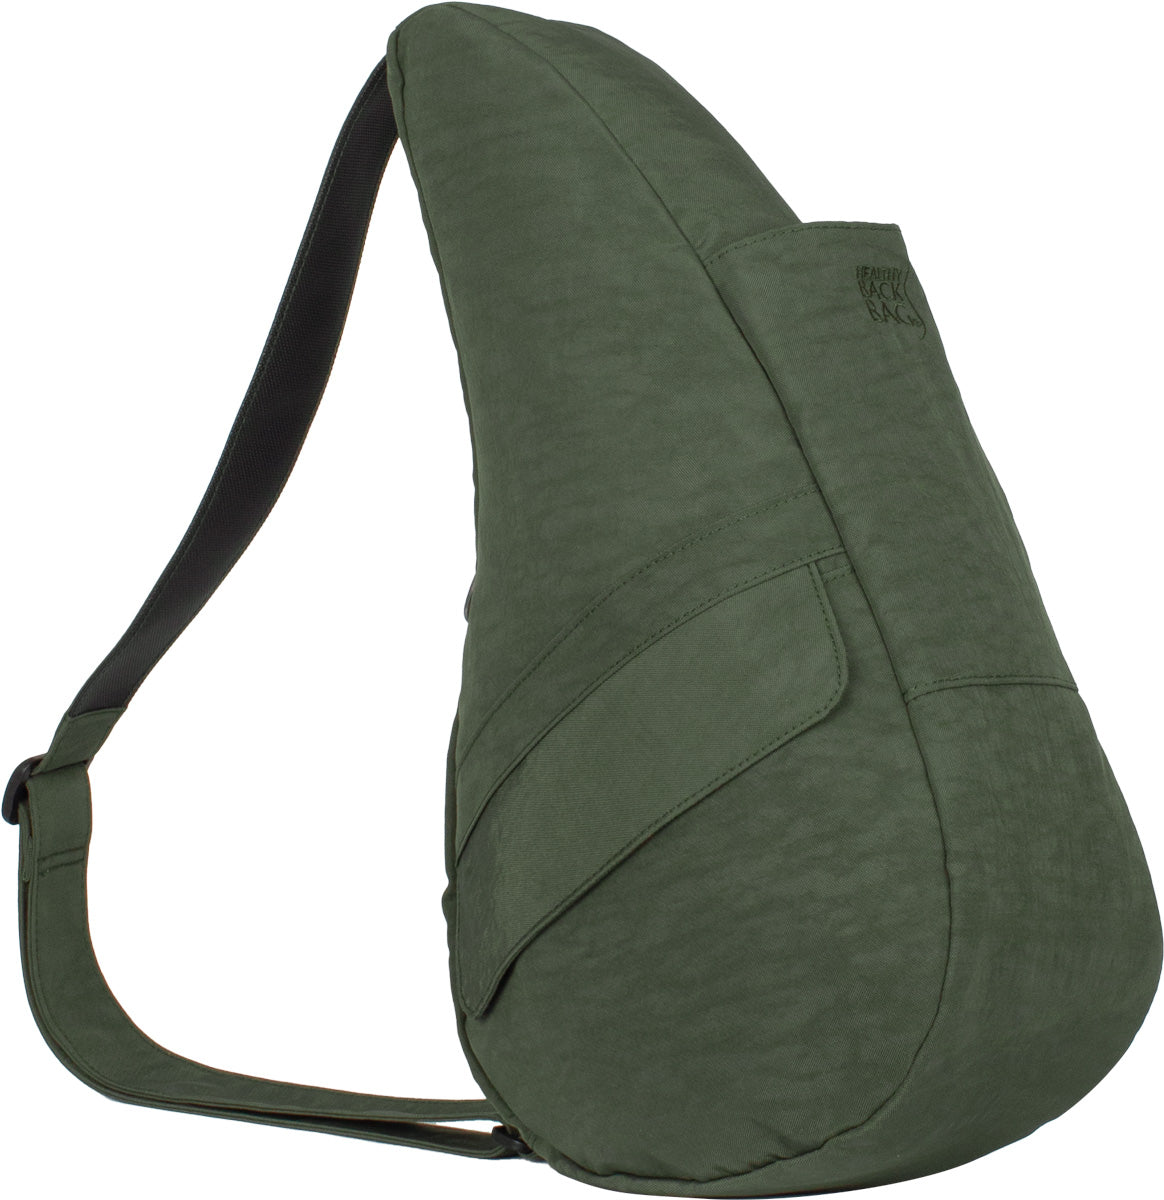 Ameribag Healthy Back Bag Tote Distressed Nylon Small Color: Jungle Green